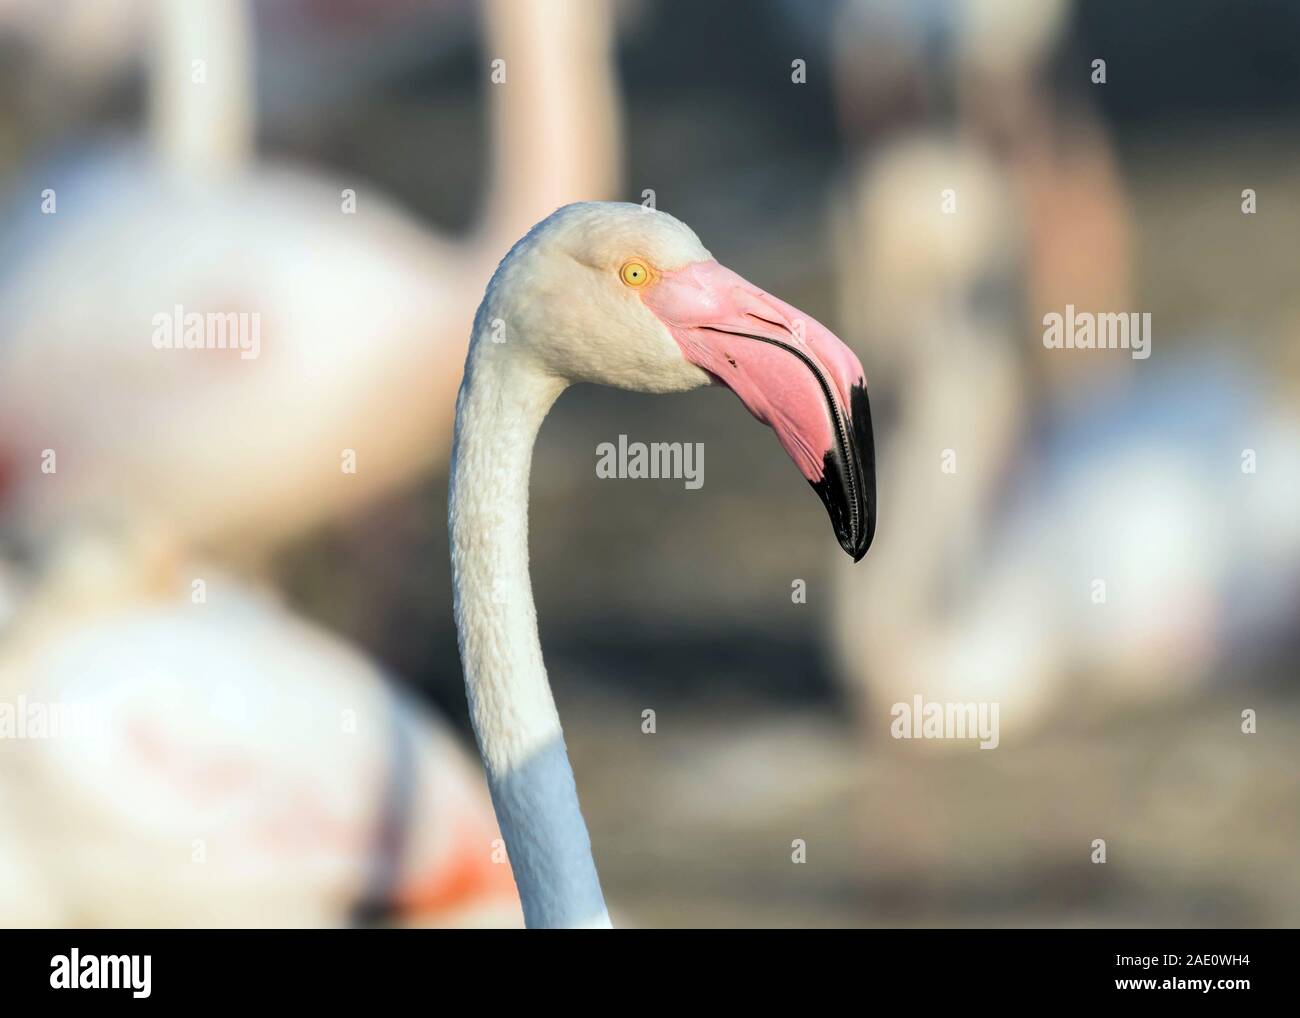 Caribbean pink flamingo at Ras al Khor Wildlife Sanctuary, a wetland reserve in Dubai, United Arab Emirates Stock Photo